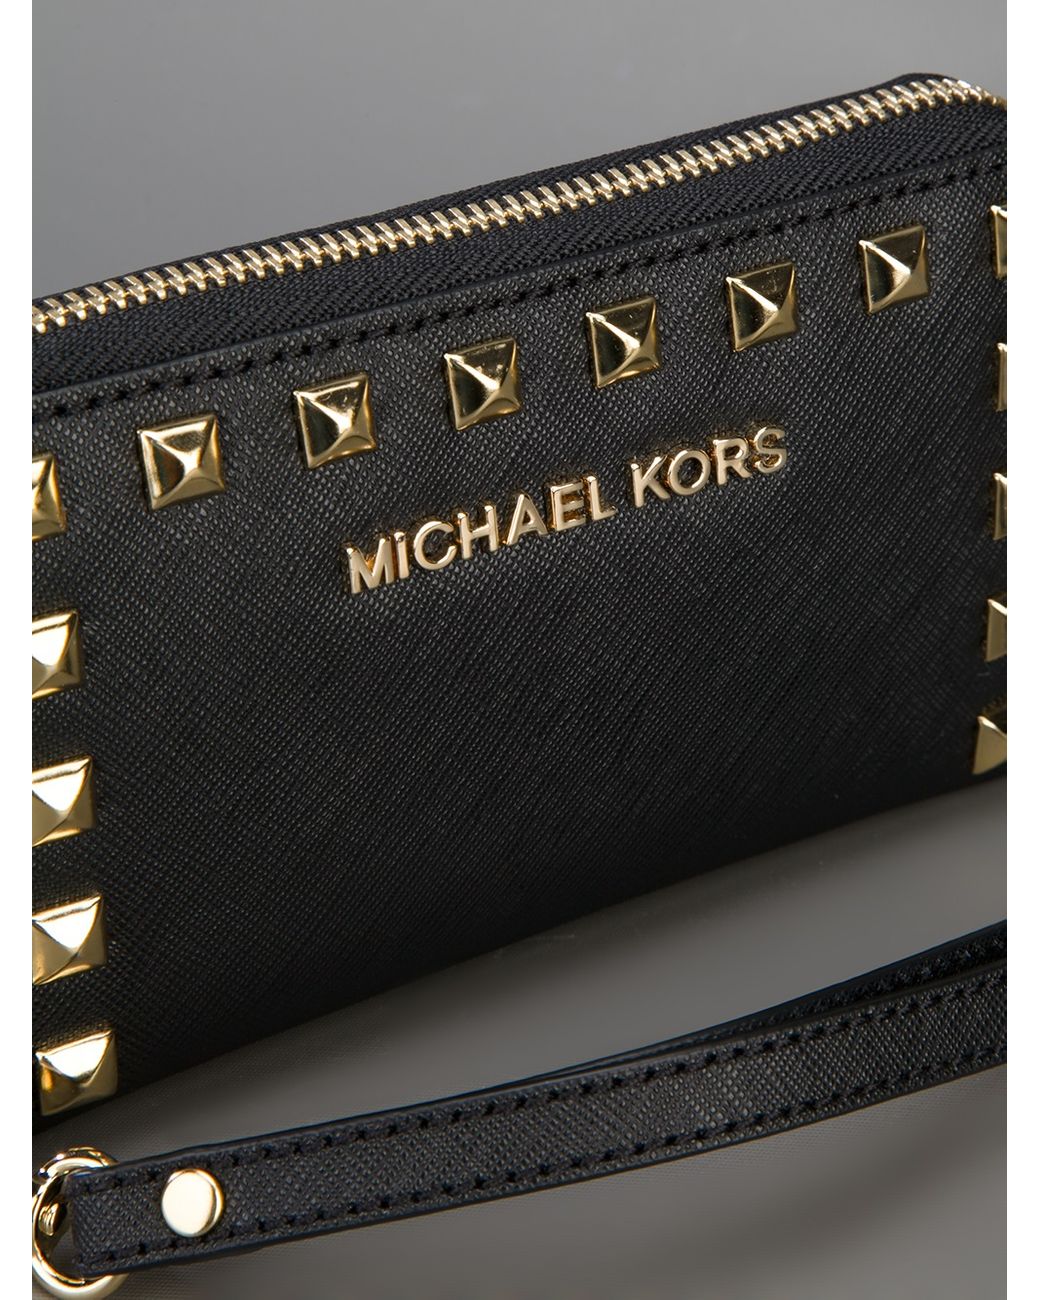 Michael Kors Studded Wristlet Wallet in Black | Lyst